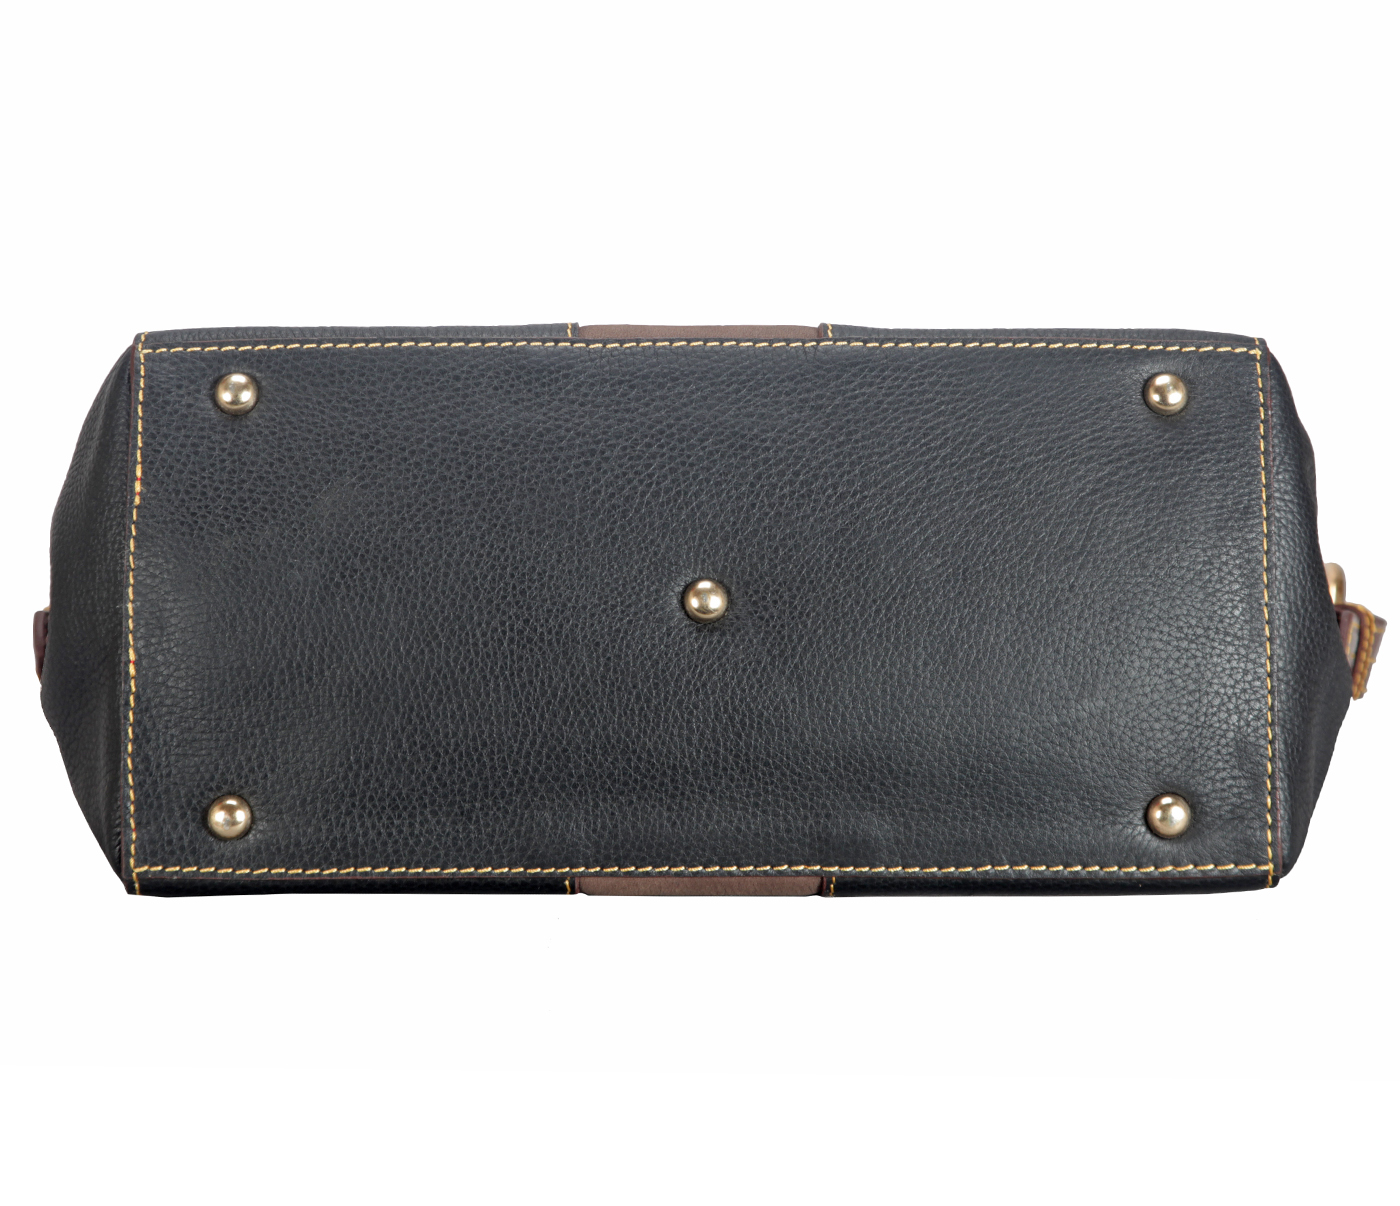 Handbag-Gretta-Short handle cum Sling bag in Genuine Leather - Black